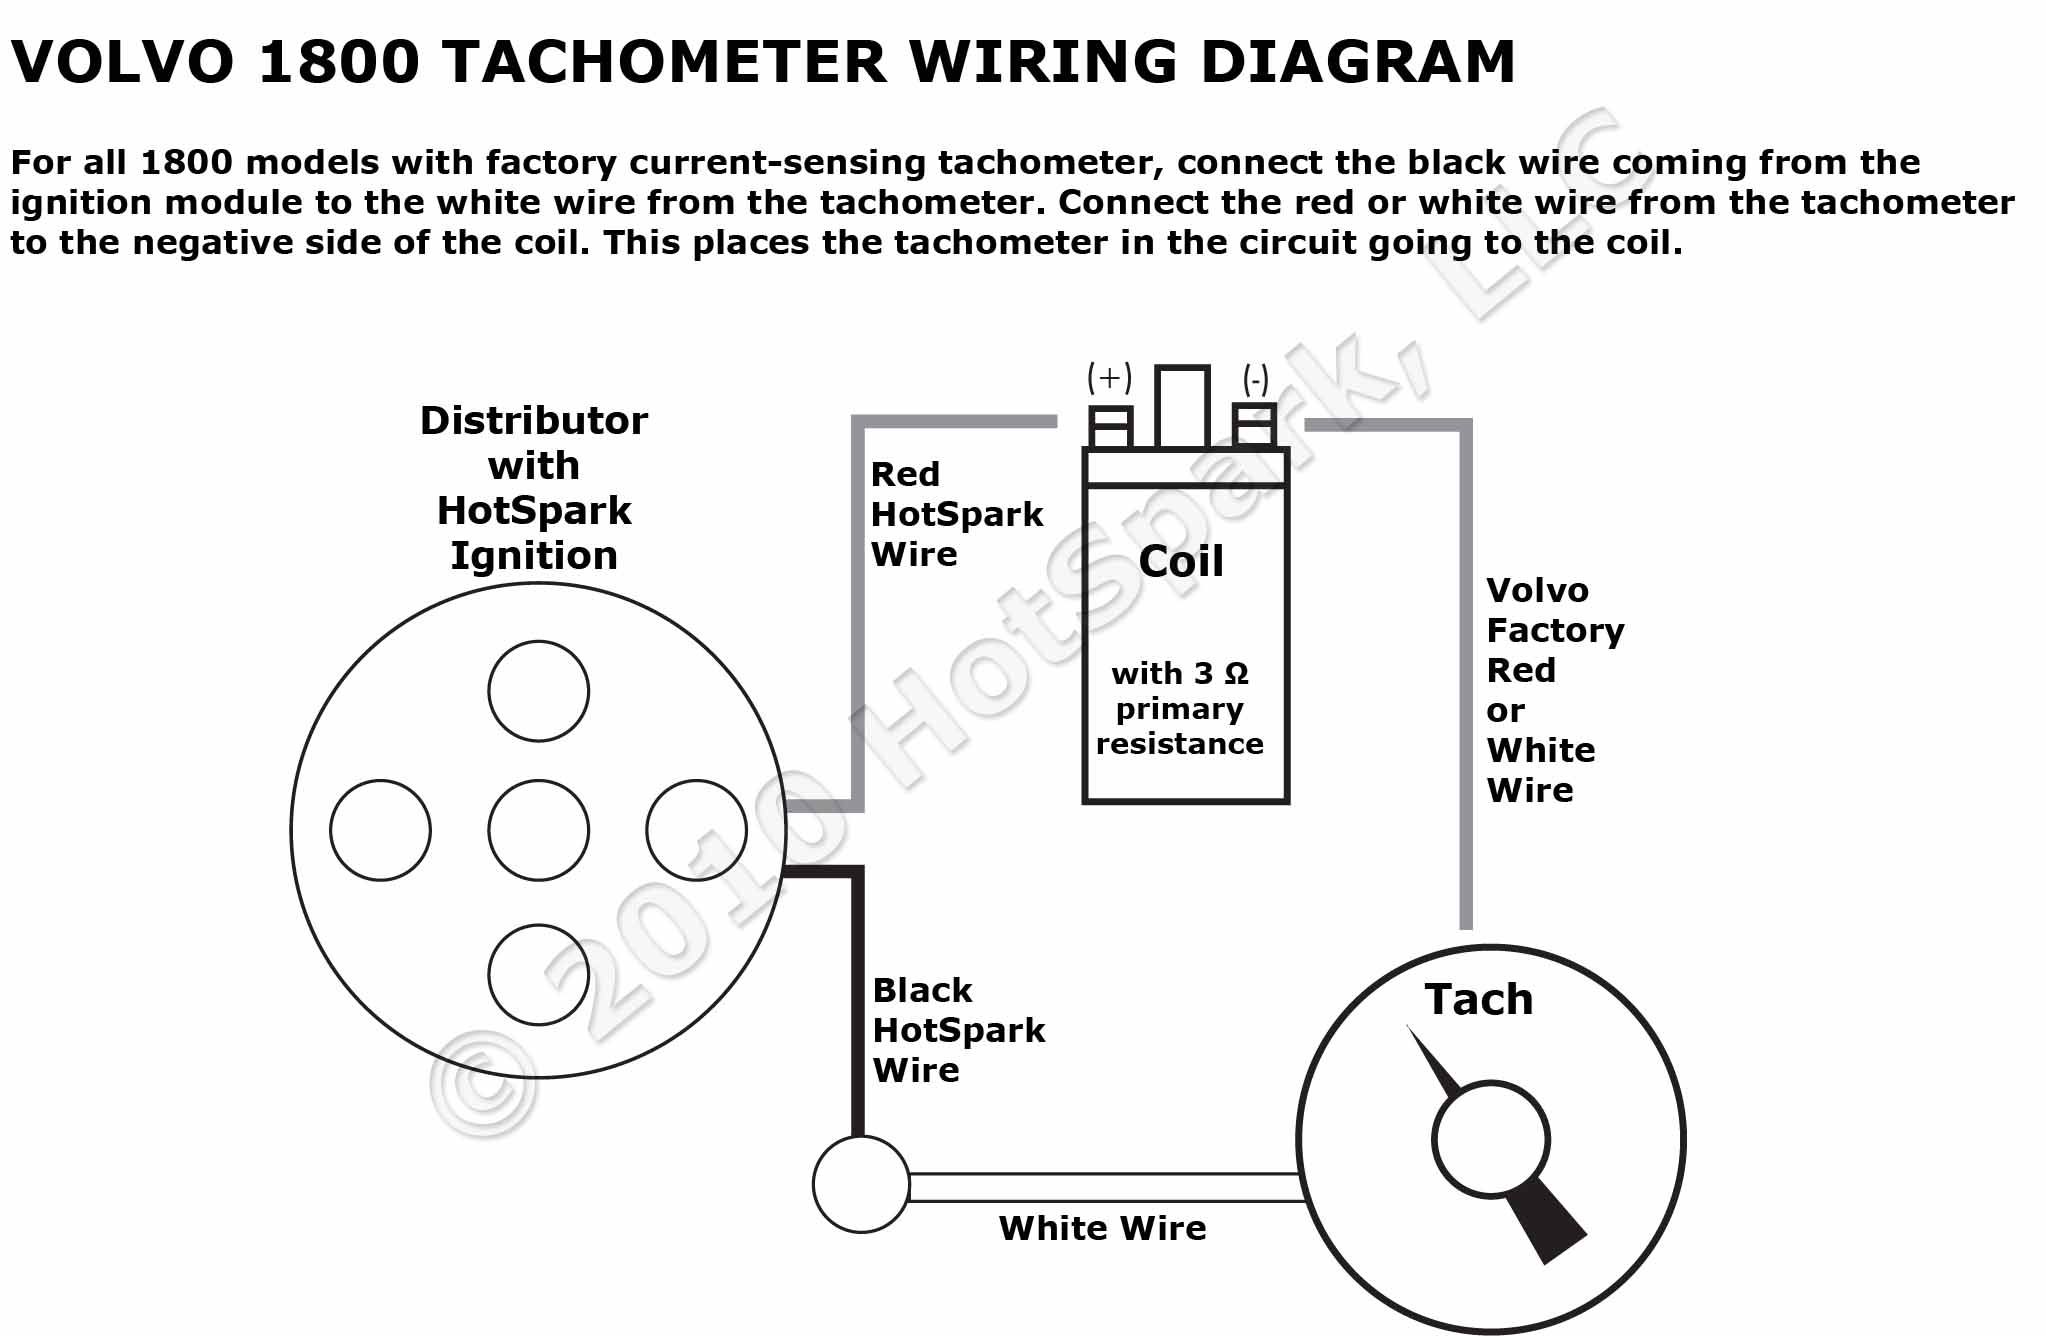 Volvo Tachometer Wiring - Wiring Diagrams Hubs - Tachometer Wiring Diagram